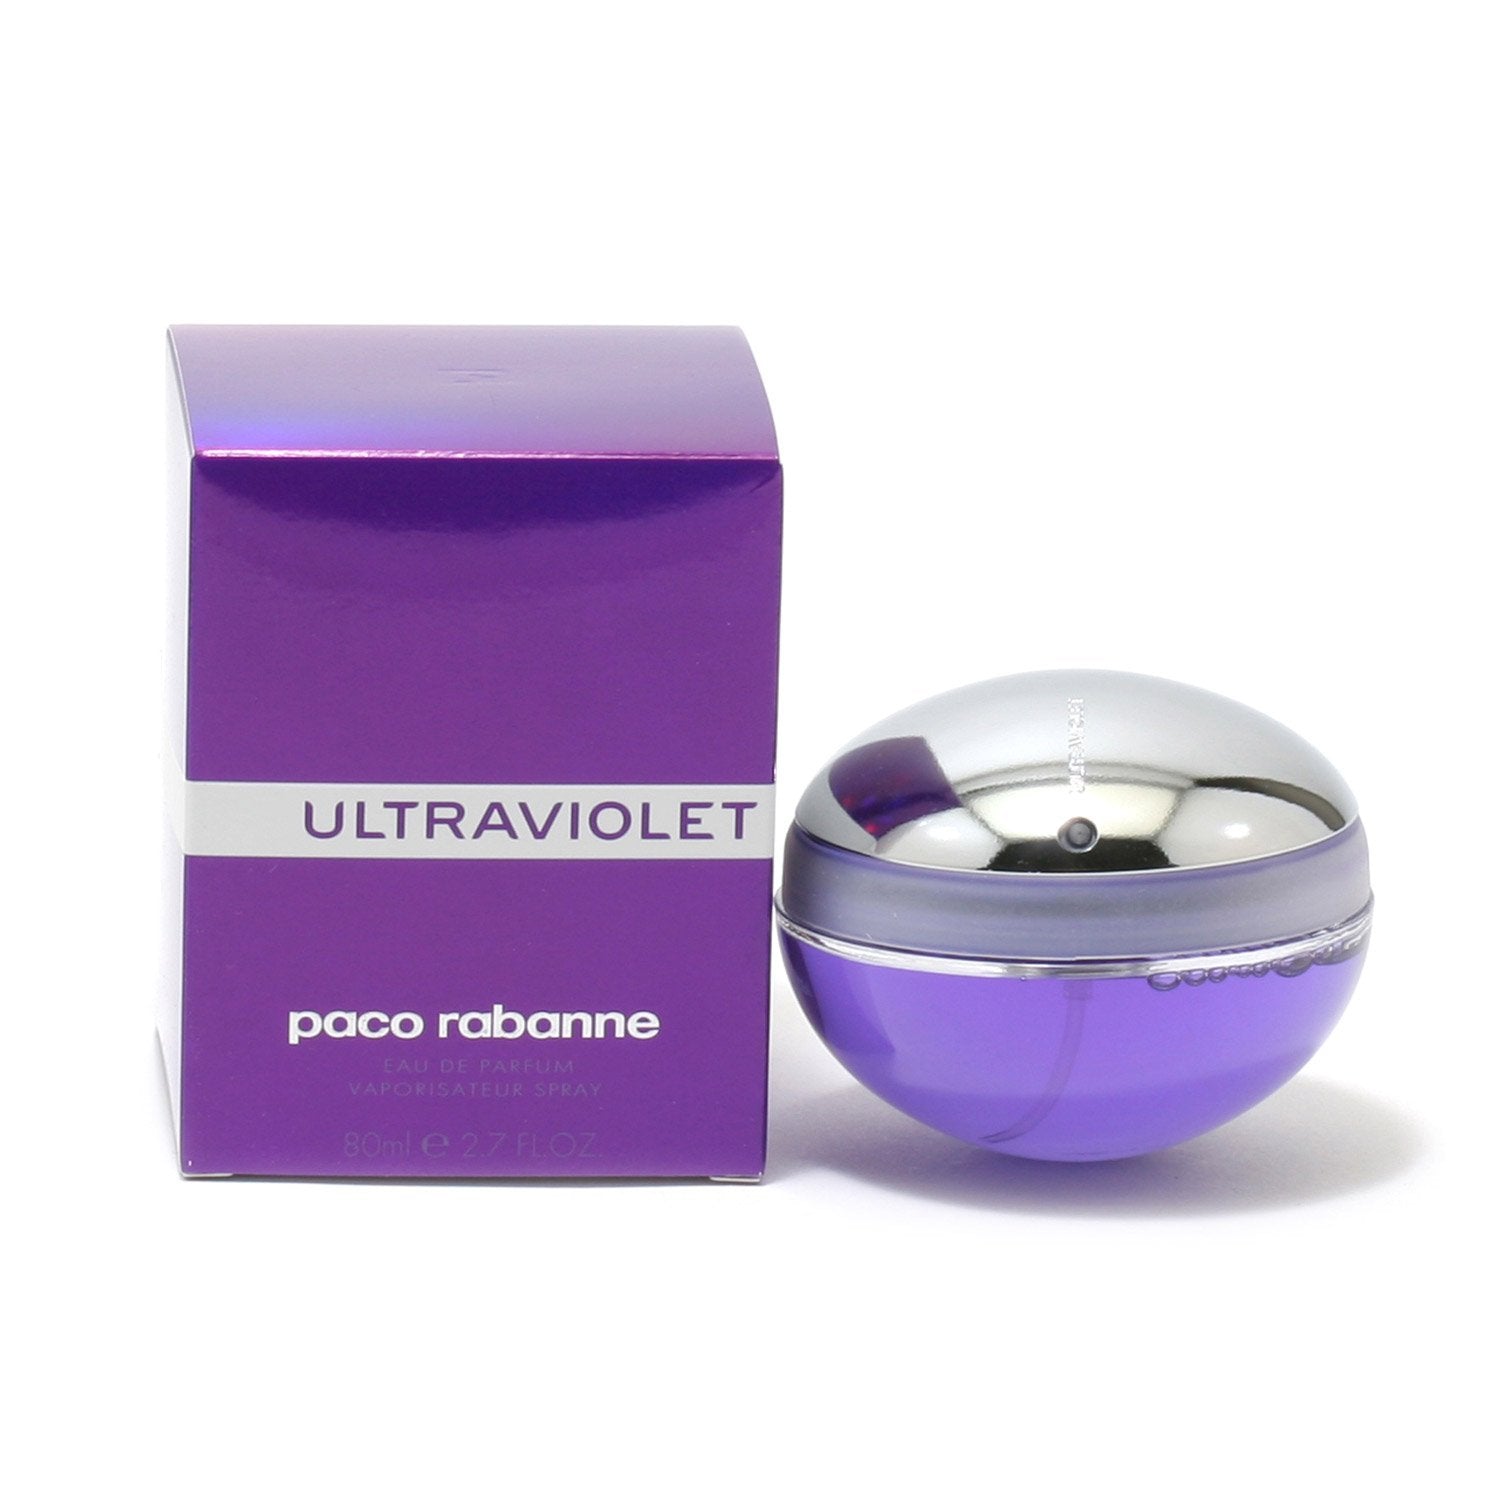 Perfume - PACO RABANNE ULTRAVIOLET FOR WOMEN - EAU DE PARFUM SPRAY, 2.7 OZ